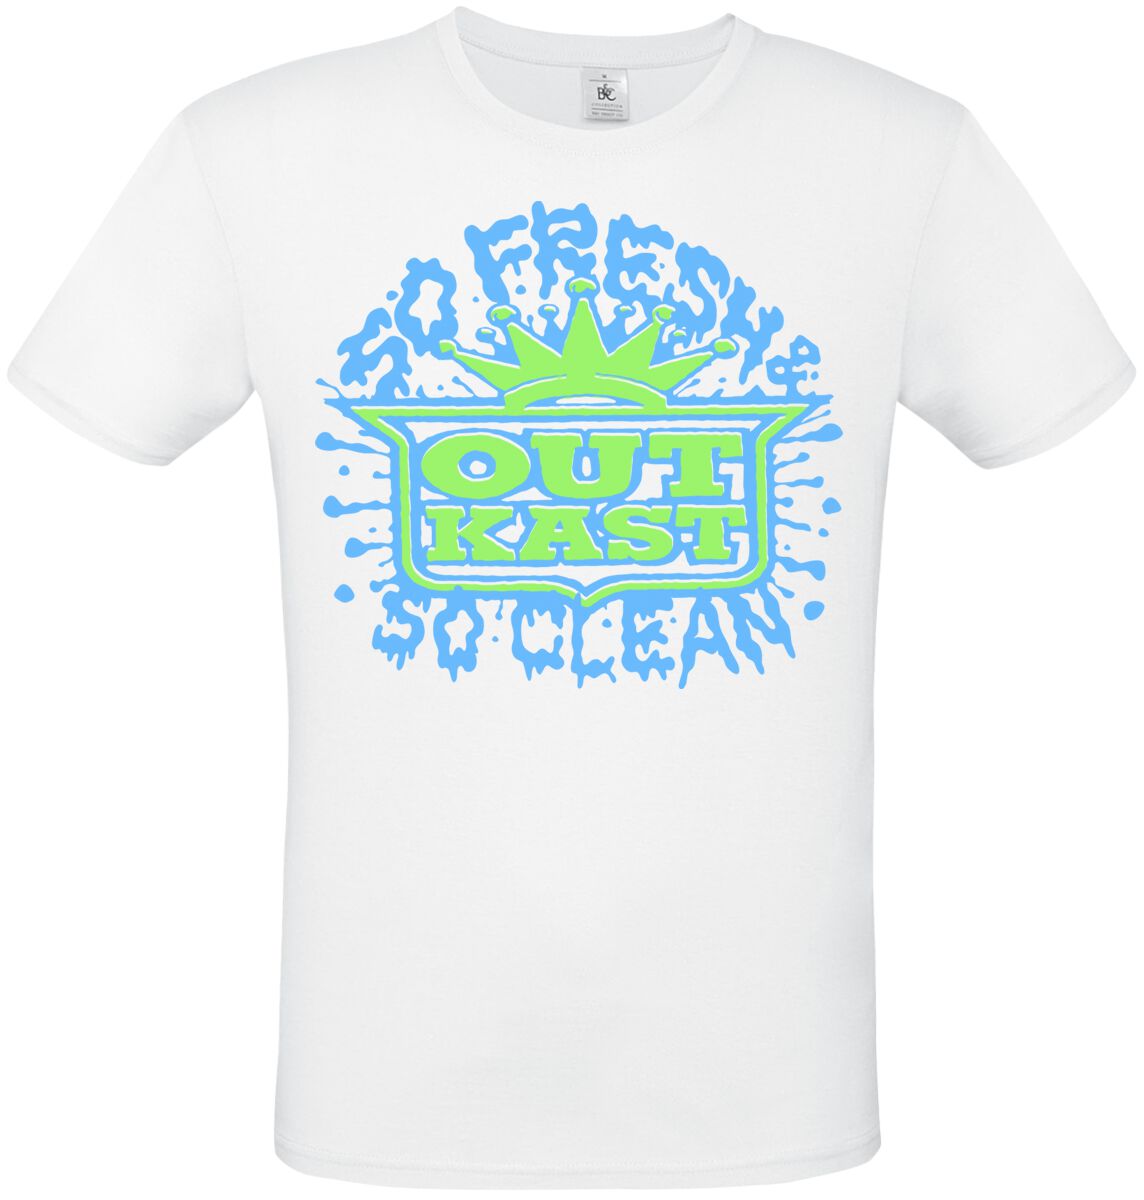 outkast t-shirt - so fresh so clean - s bis 3xl - fÃ¼r mÃ¤nner - grÃ¶ÃŸe xxl - - lizenziertes merchandise! weiÃŸ